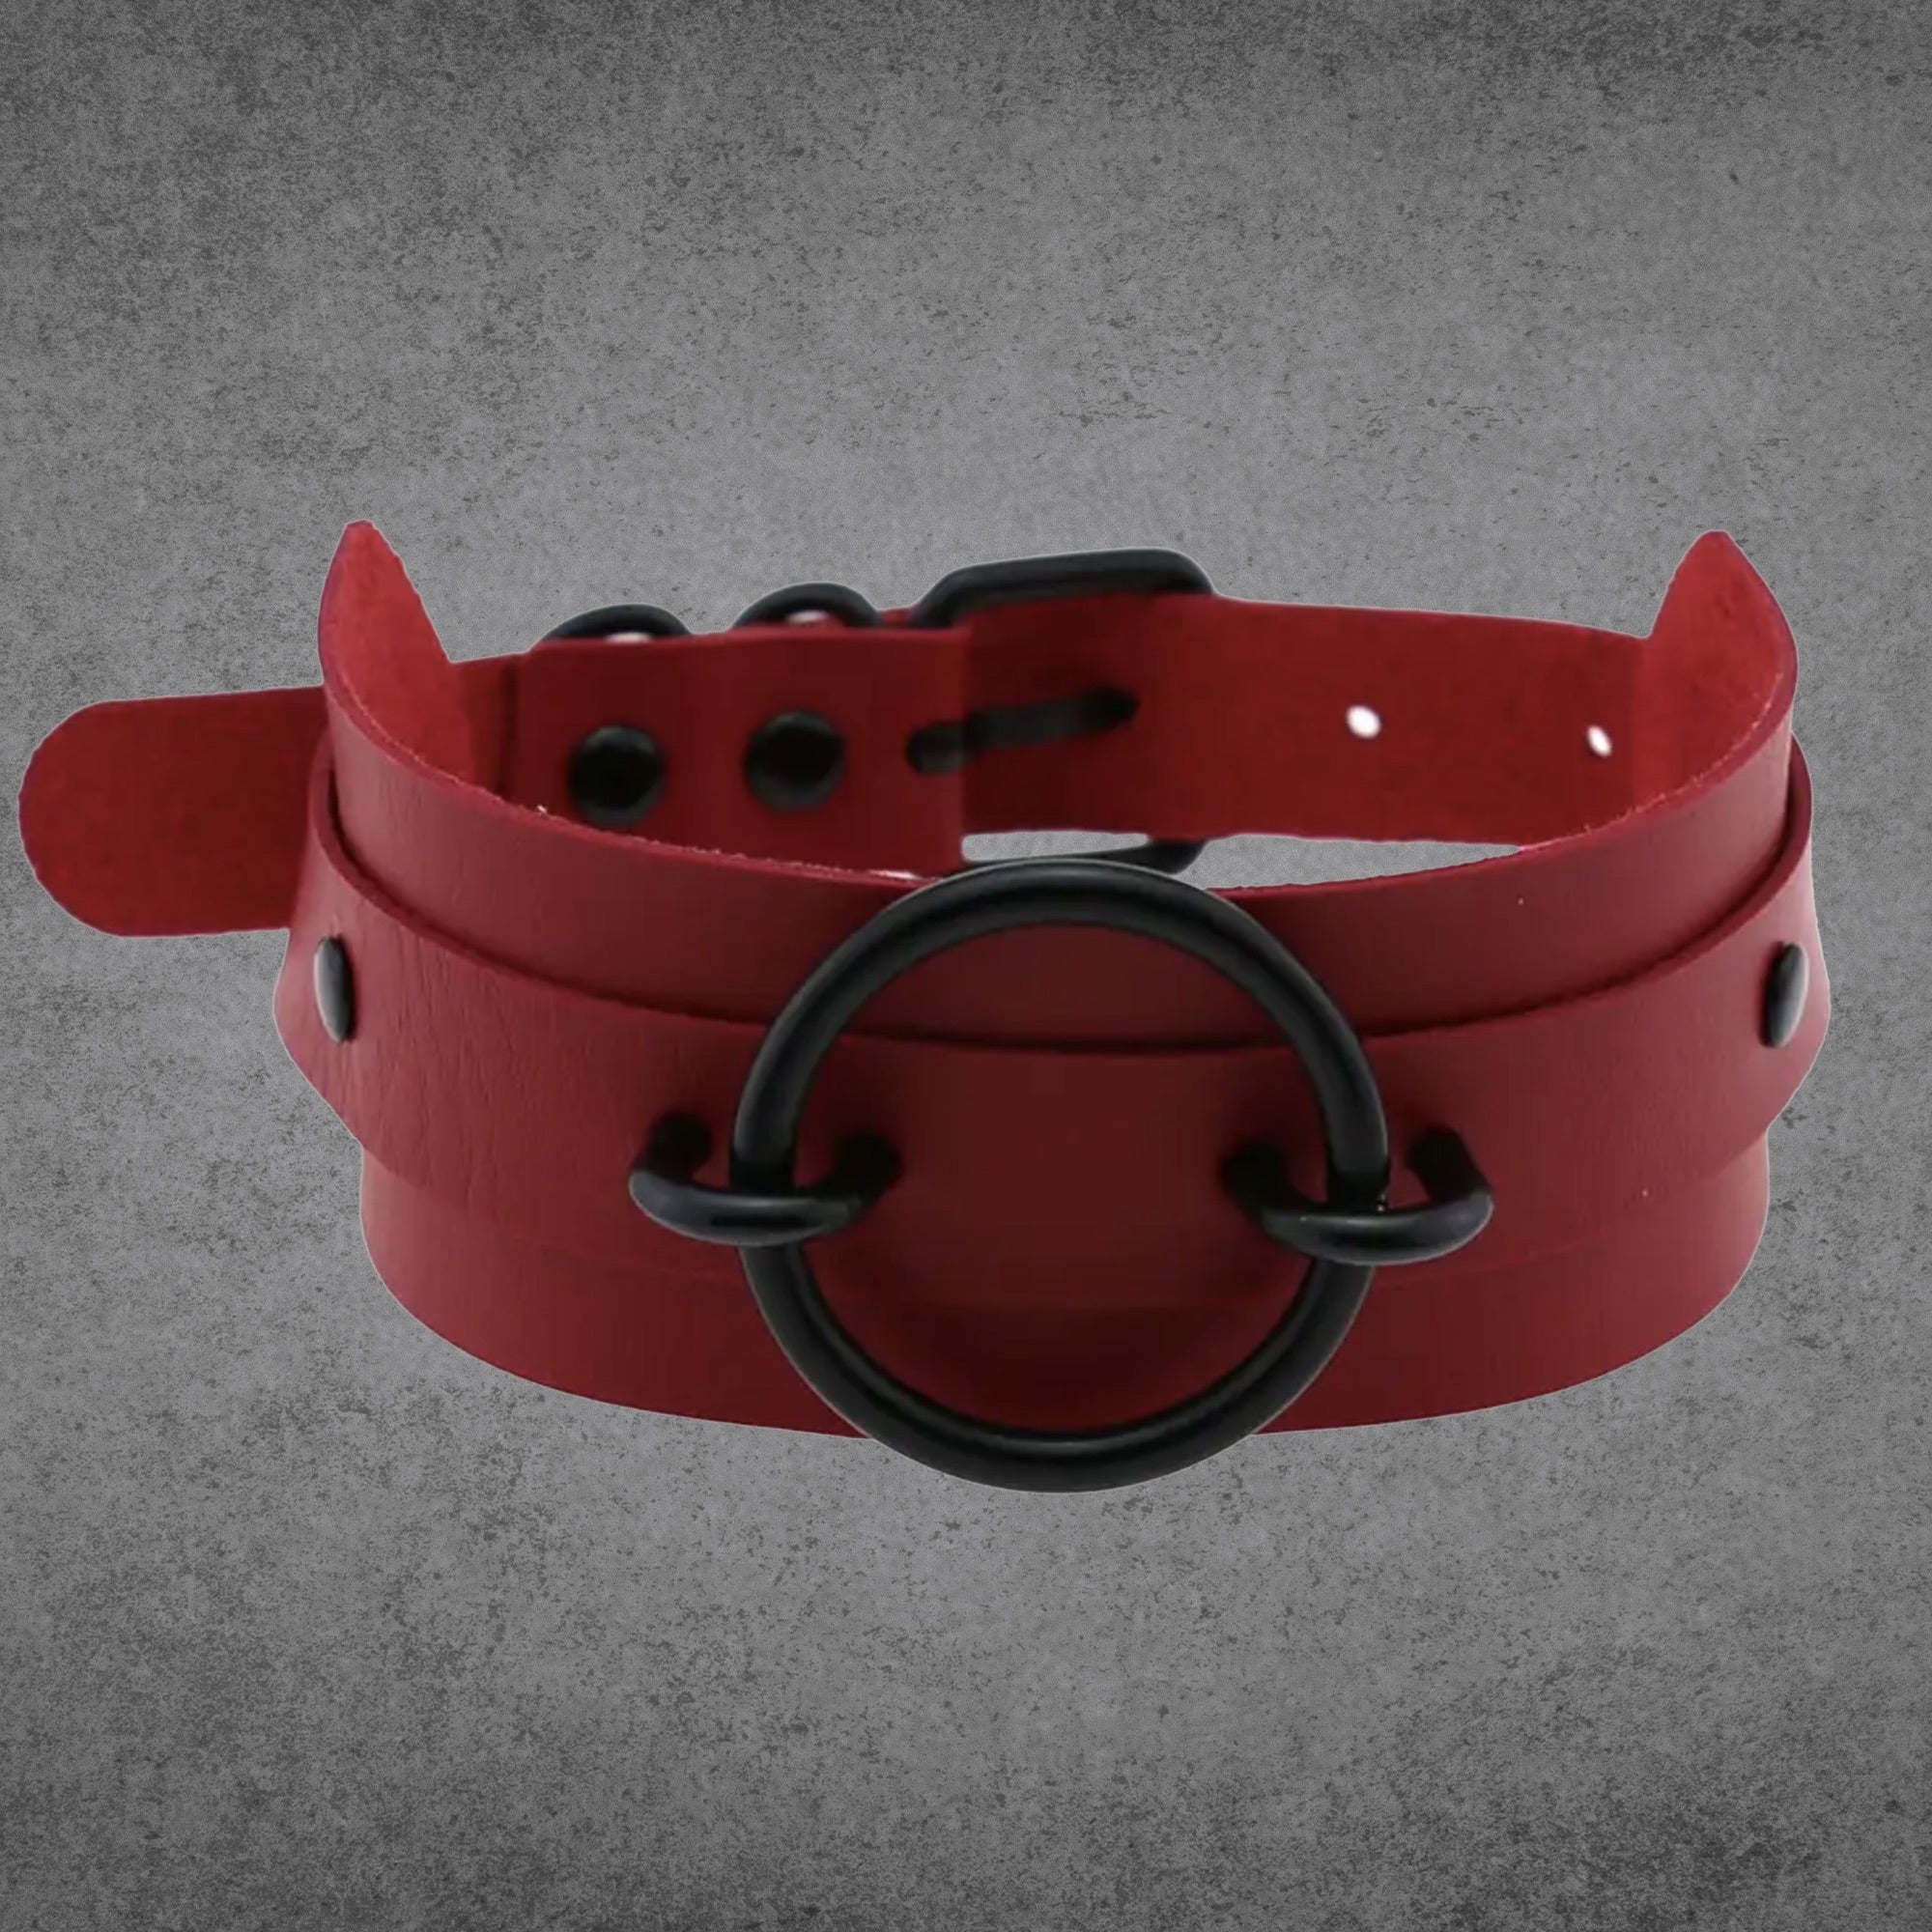 Fixed O Ring Choker Collar - Red & Black